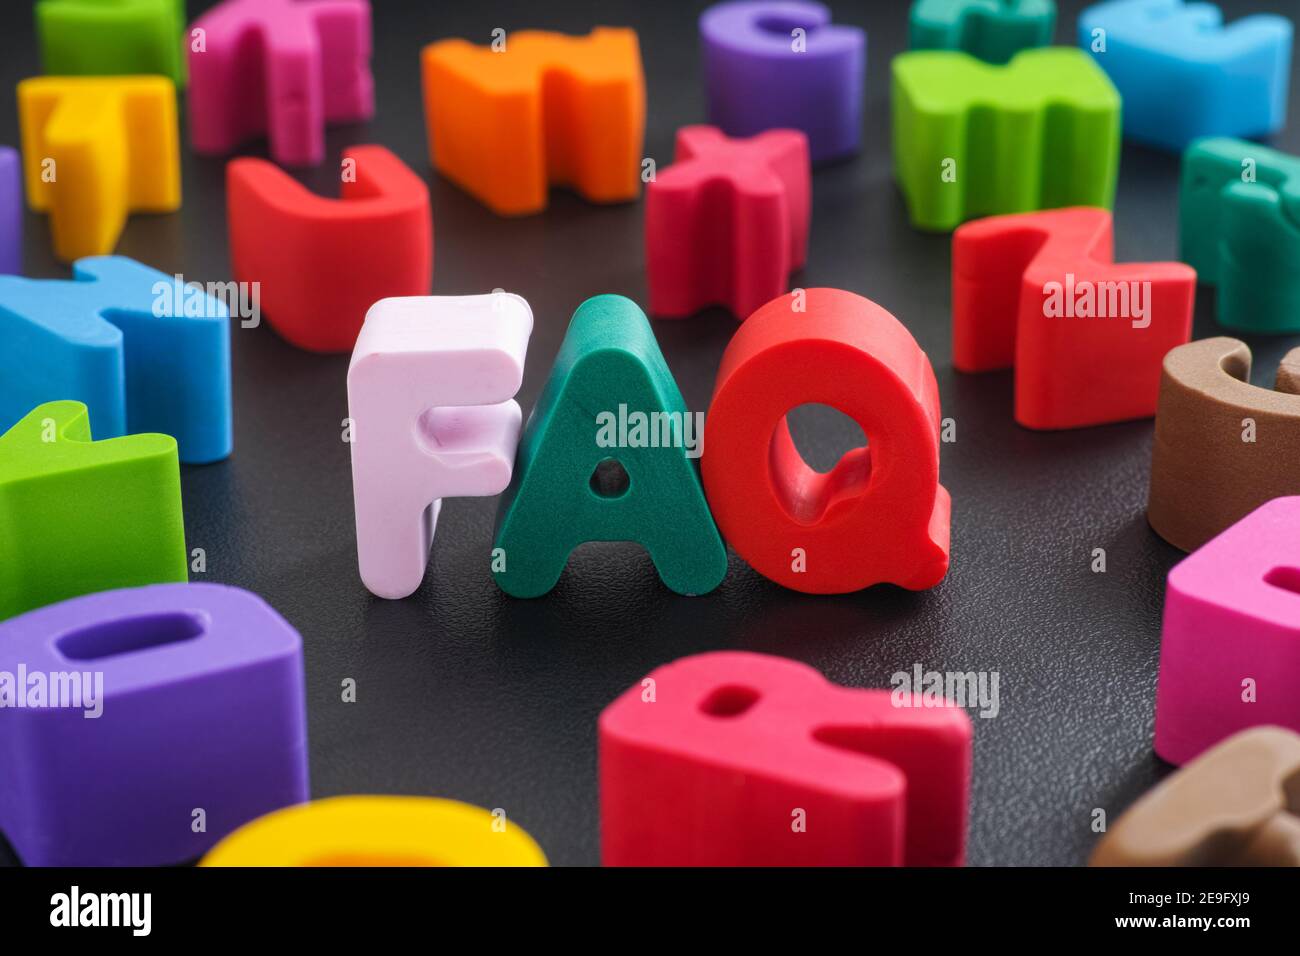 Das Akronym FAQ (Frequently Asked Questions) aus Fimo-Buchstaben. Nahaufnahme. Stockfoto